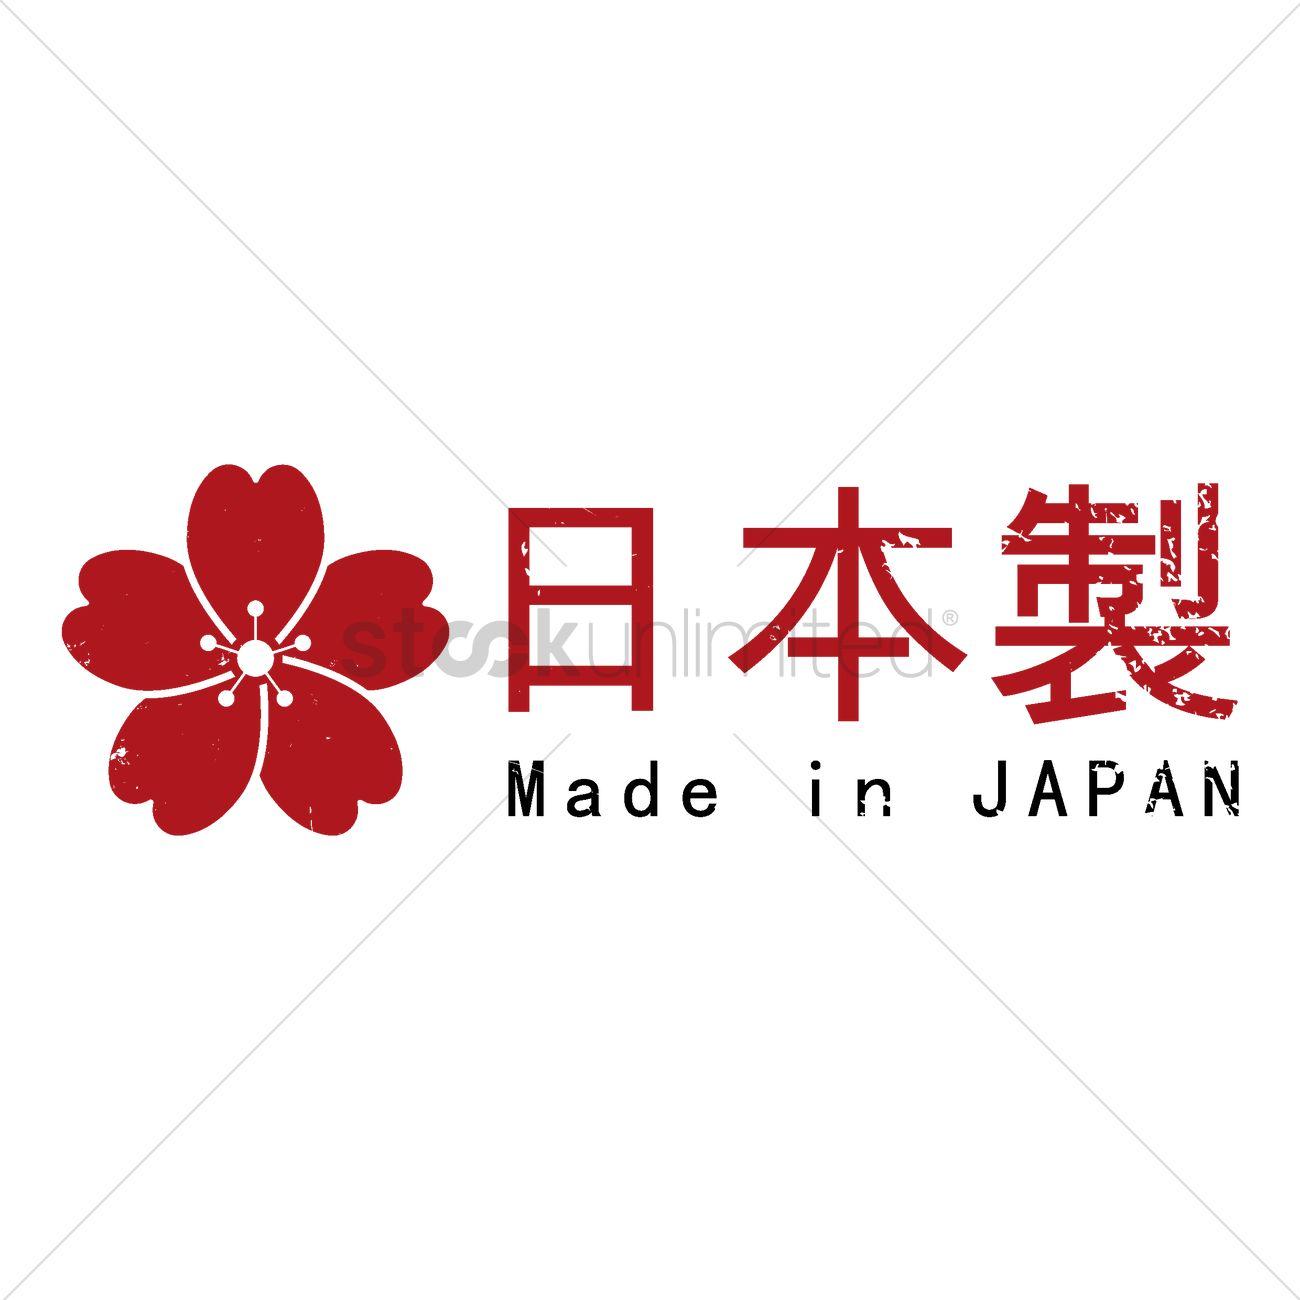 Japan Flower Logo - Made in japan Vector Image - 1581773 | StockUnlimited